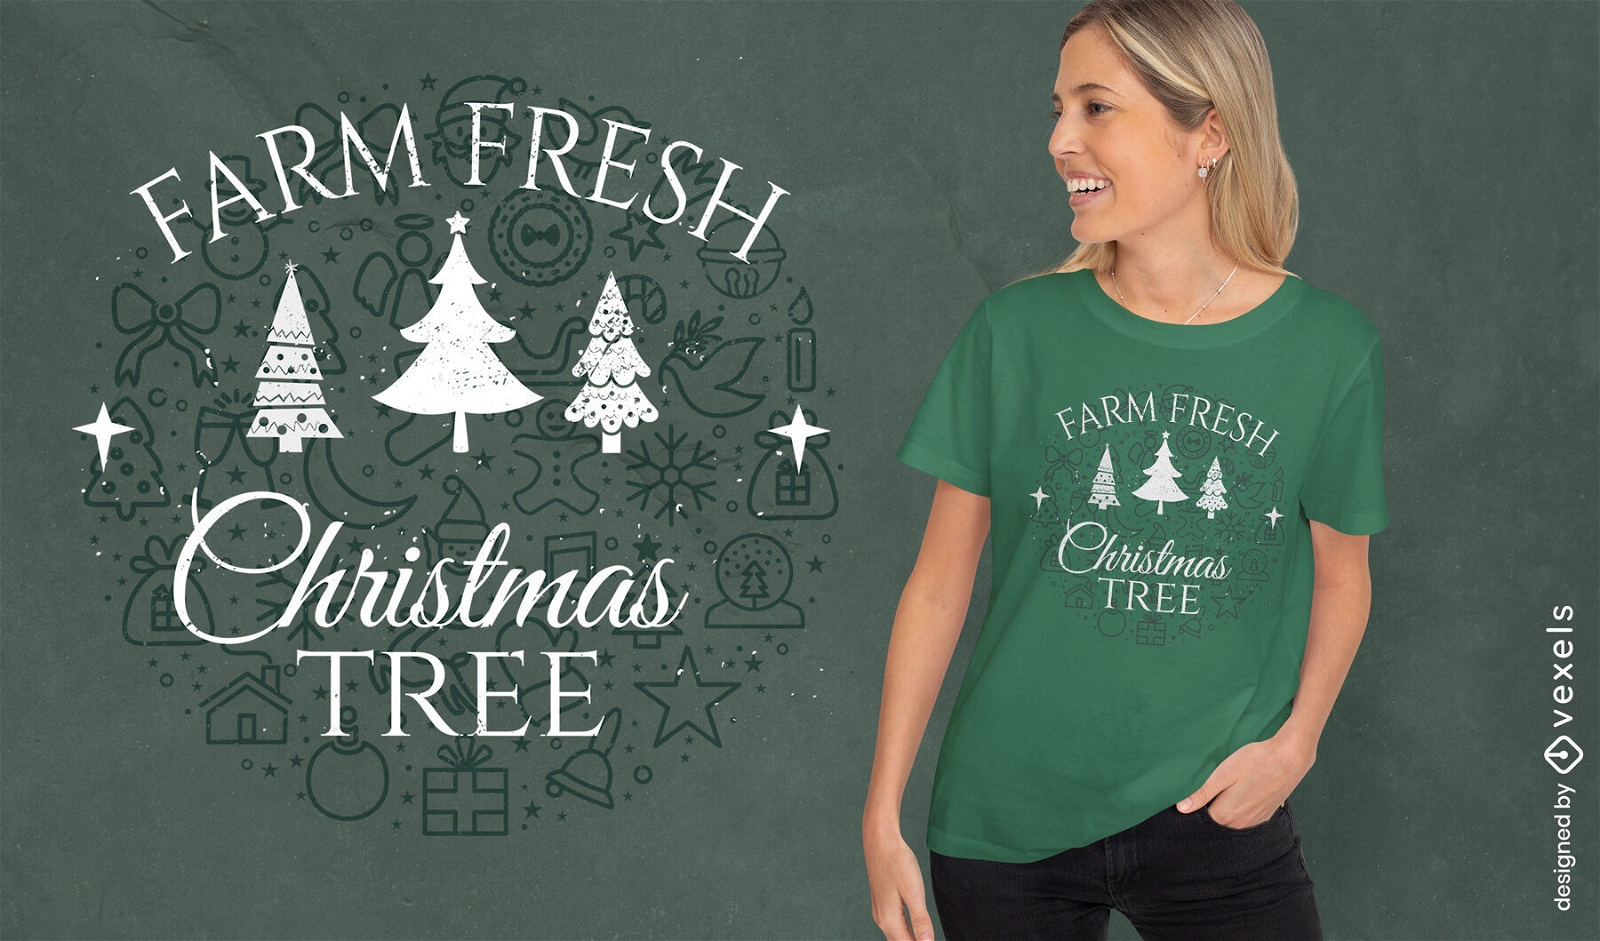 Christmas trees holiday t-shirt design